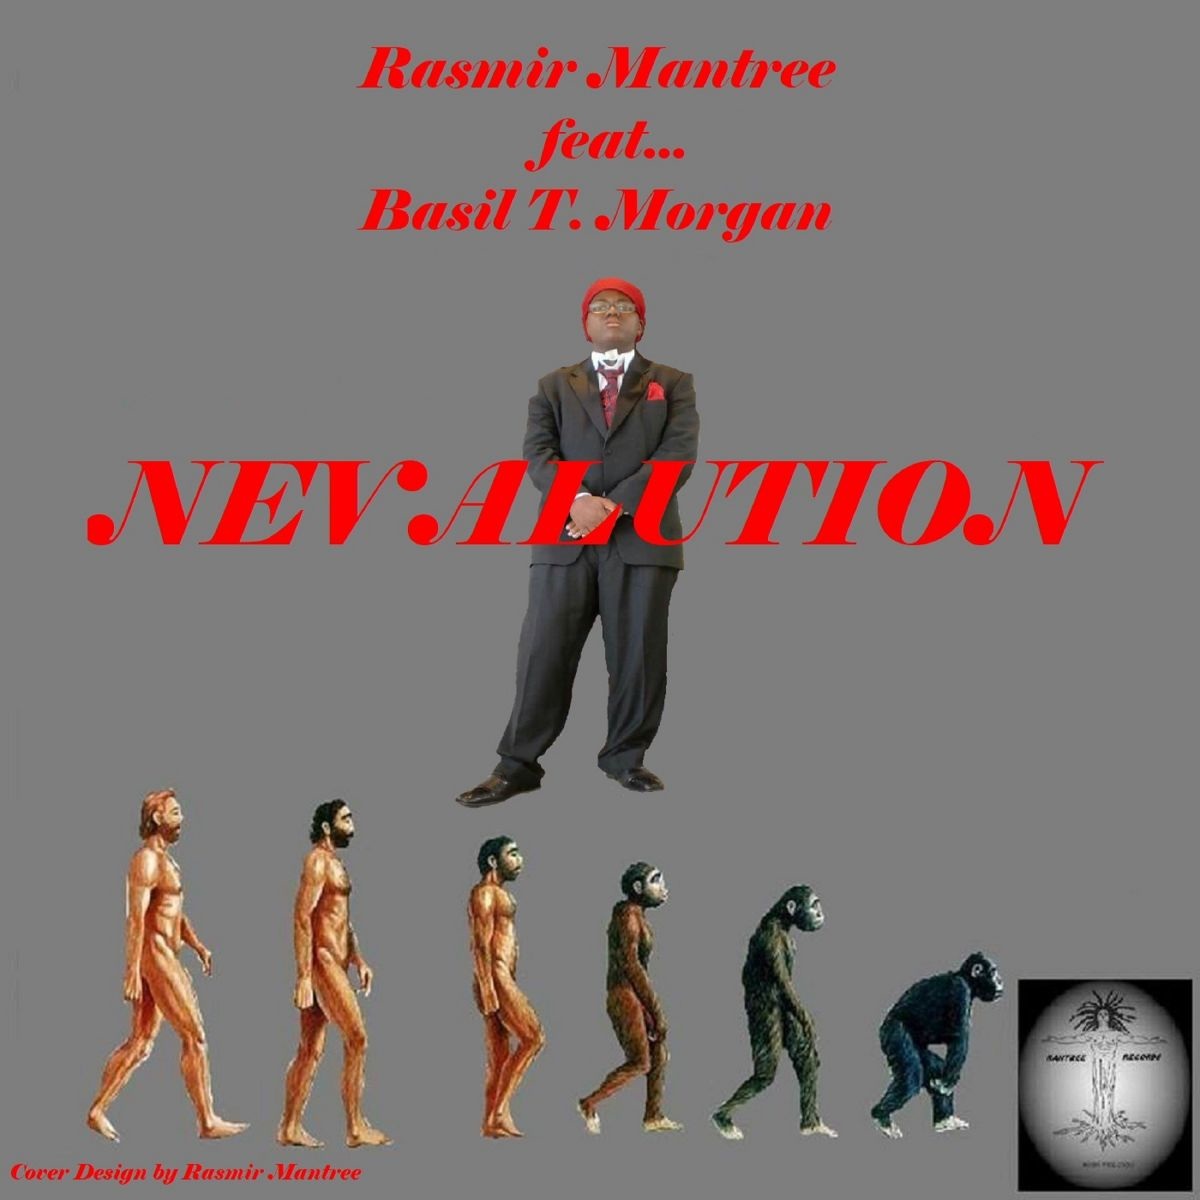 Rasmir Mantree feat. Basil T. Morgan - Nevalution / Mantree Recordings